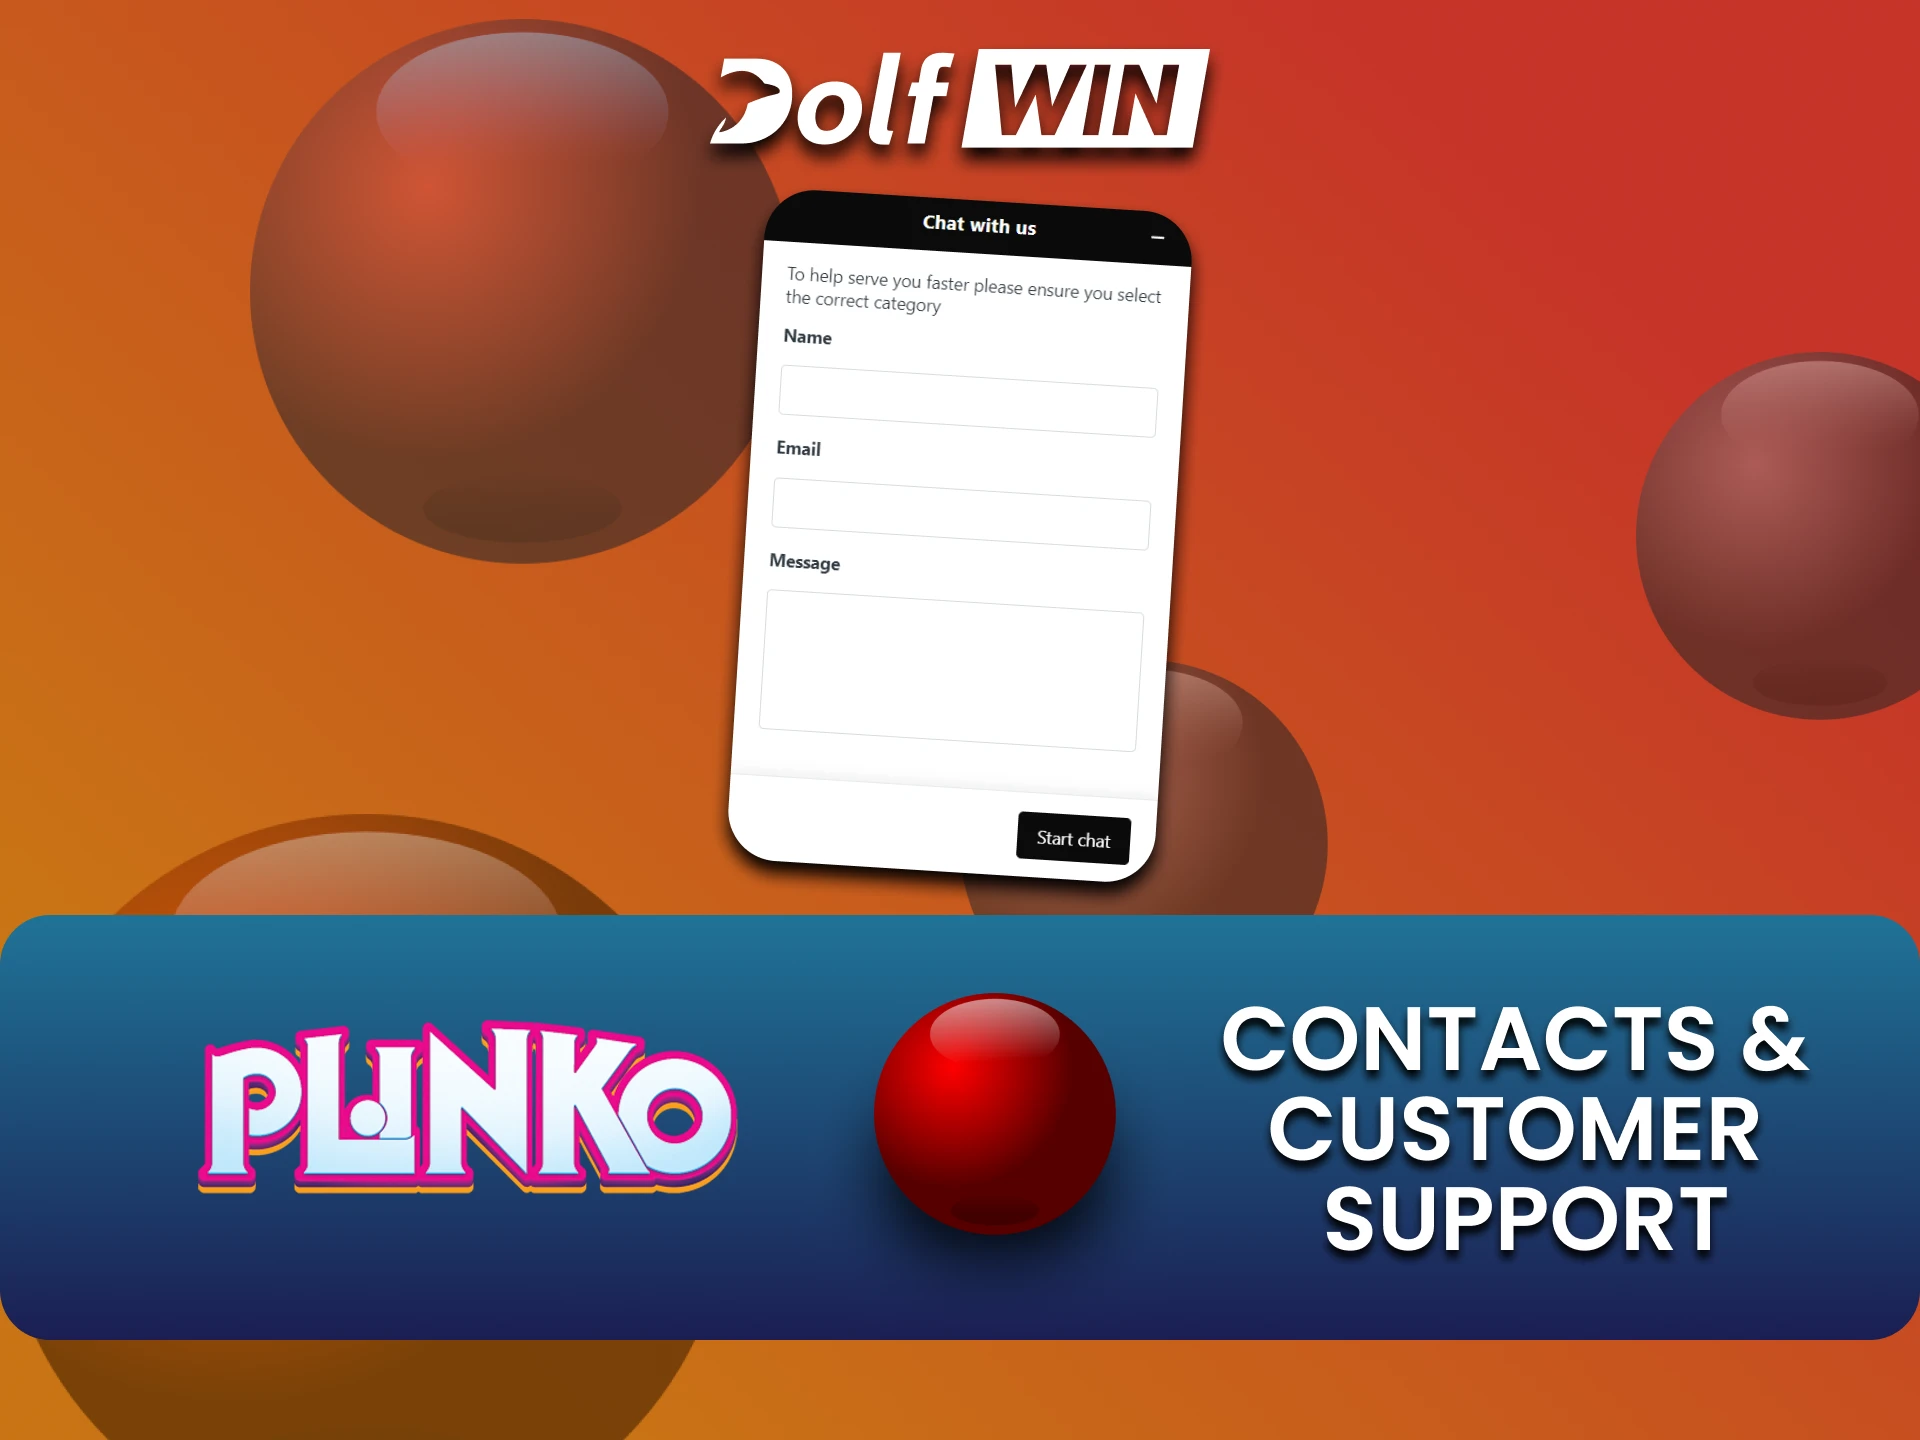 Choose your way to contact the Dolfwin team regarding Plinko questions.